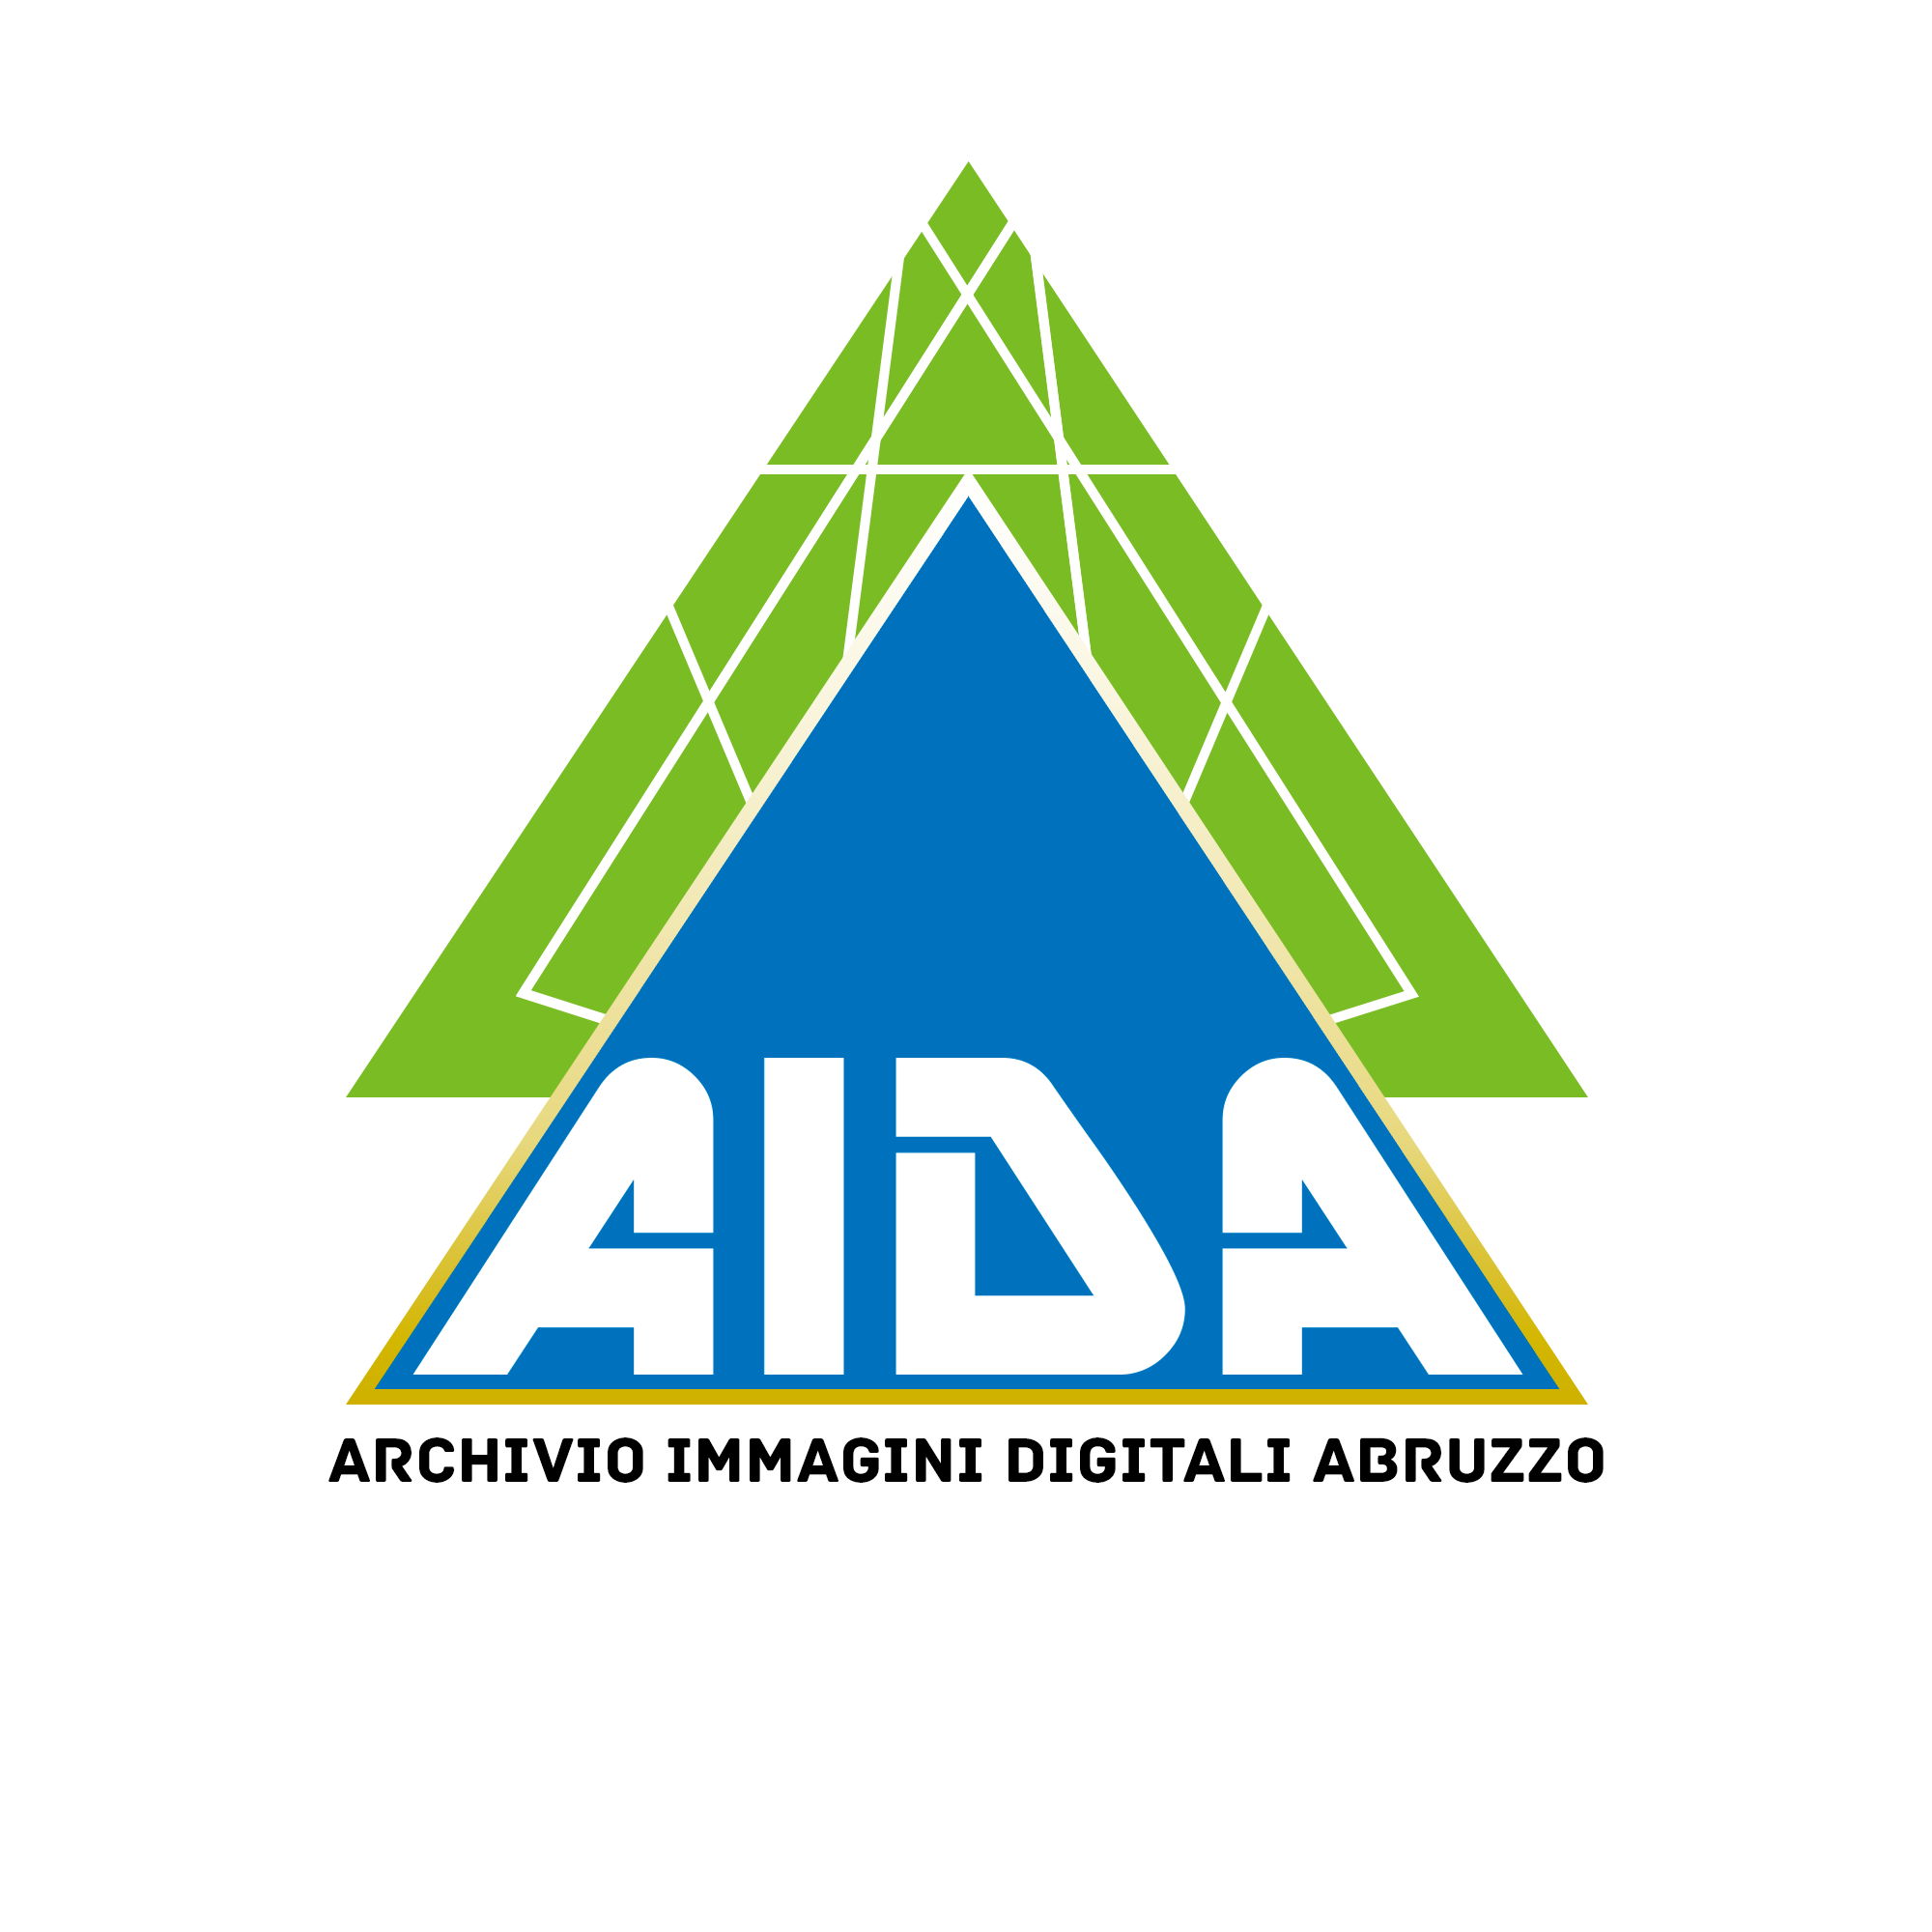 AIDA Project